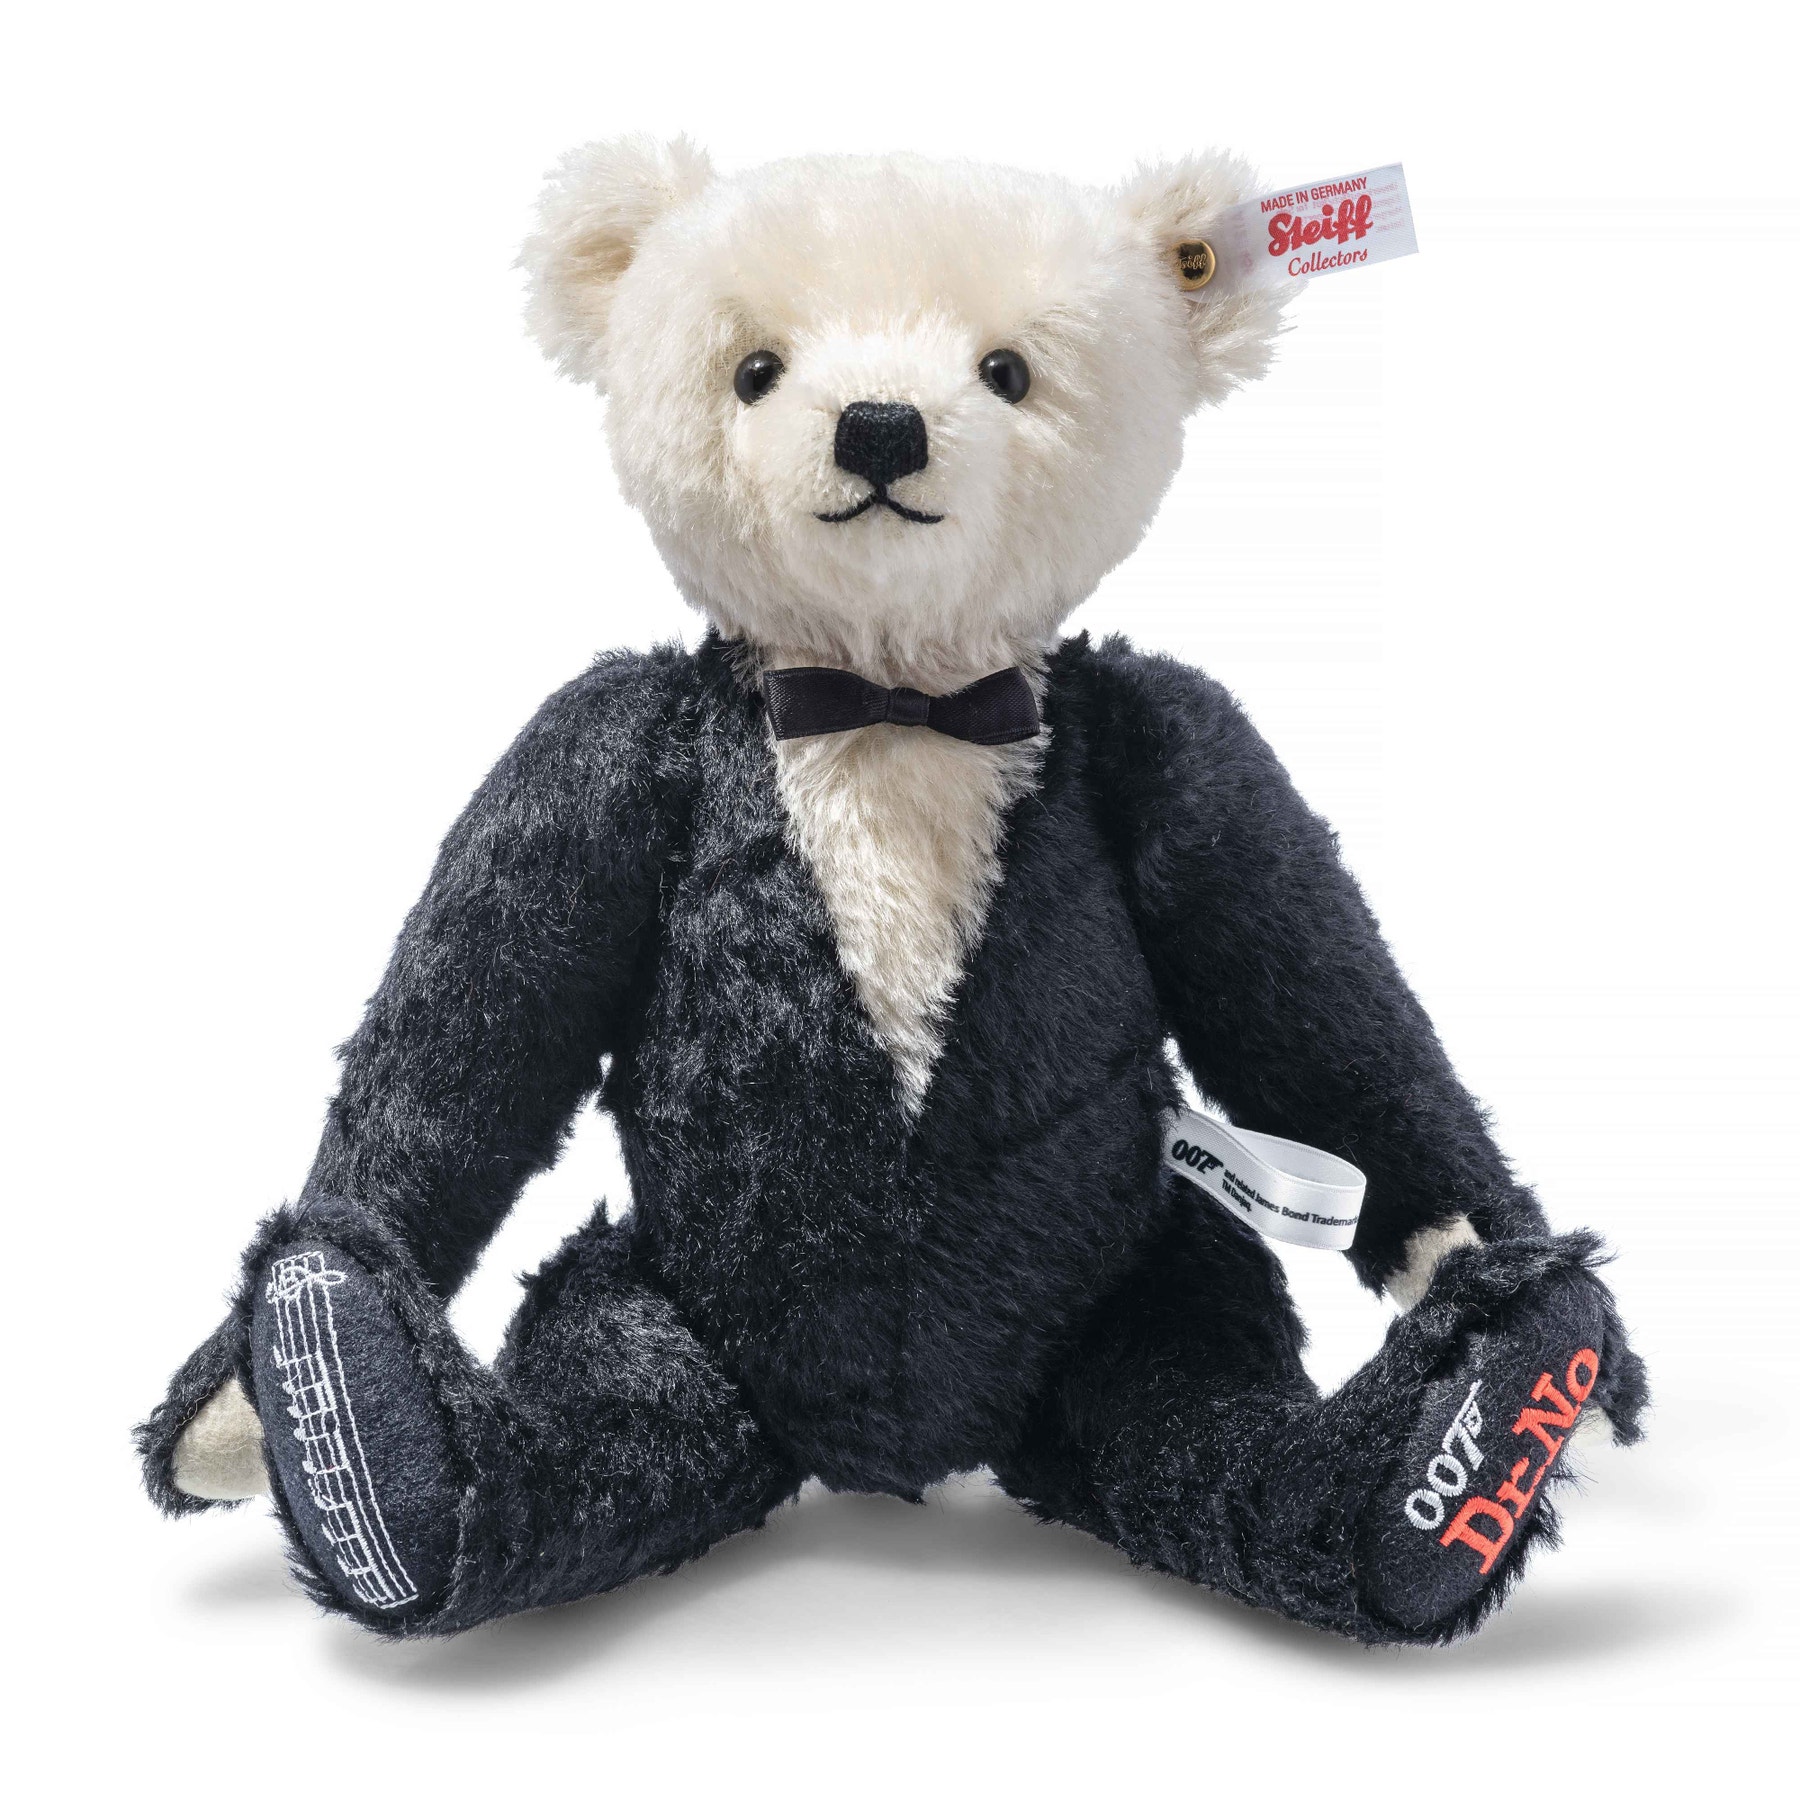 James Bond "Dr No" Musical Limited Edition Teddy Bear